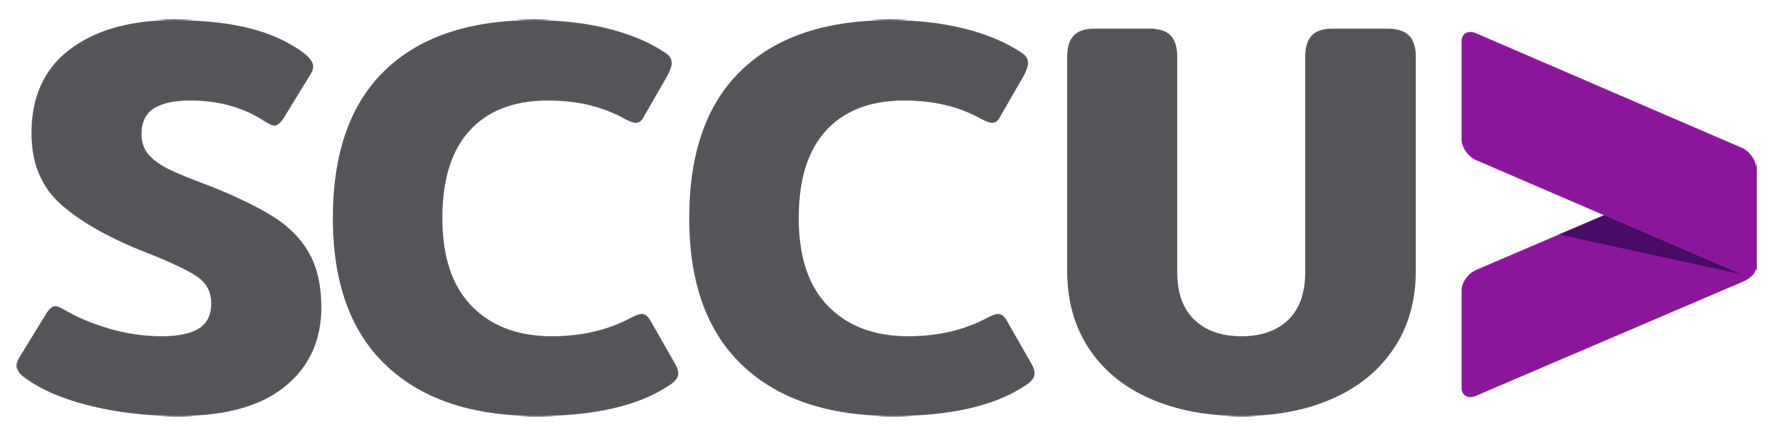 Logo for SCCU Ltd